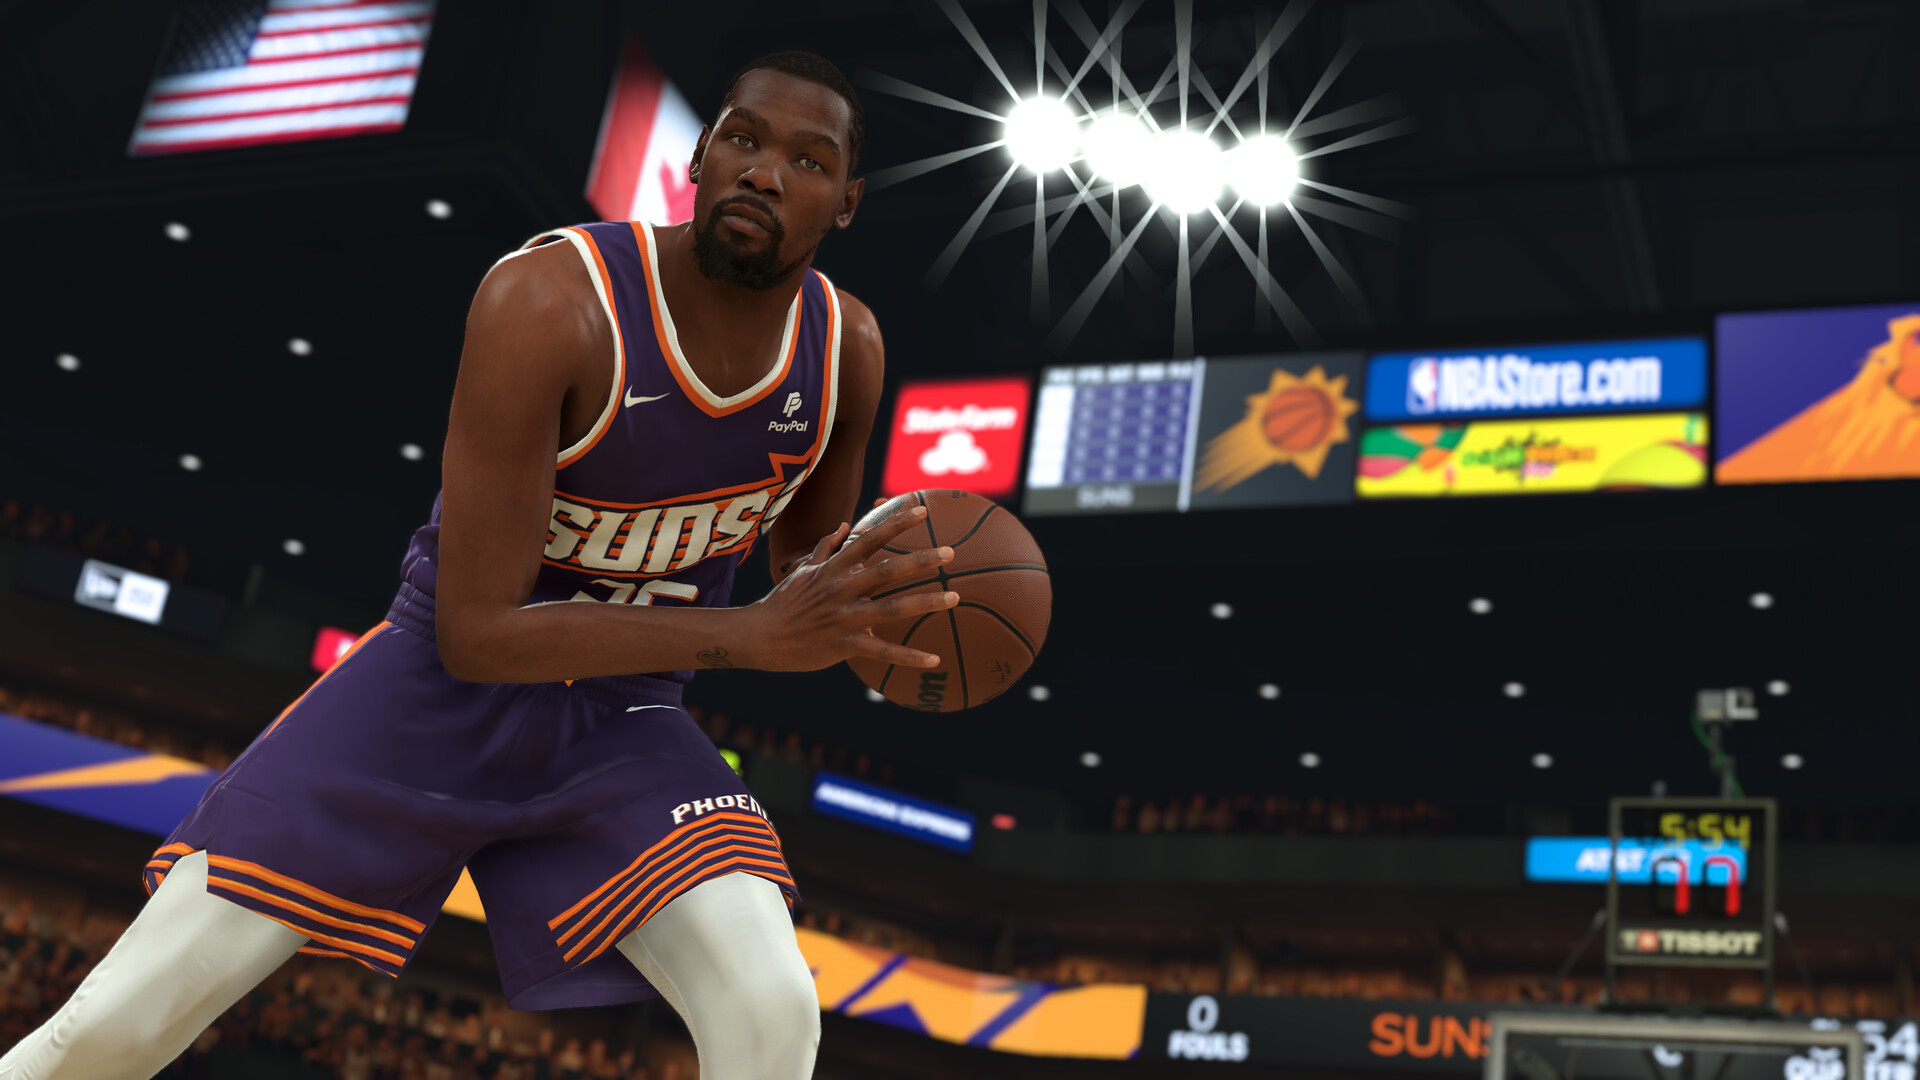 NBA 2K24: Baller Edition PlayStation 4/5 Account